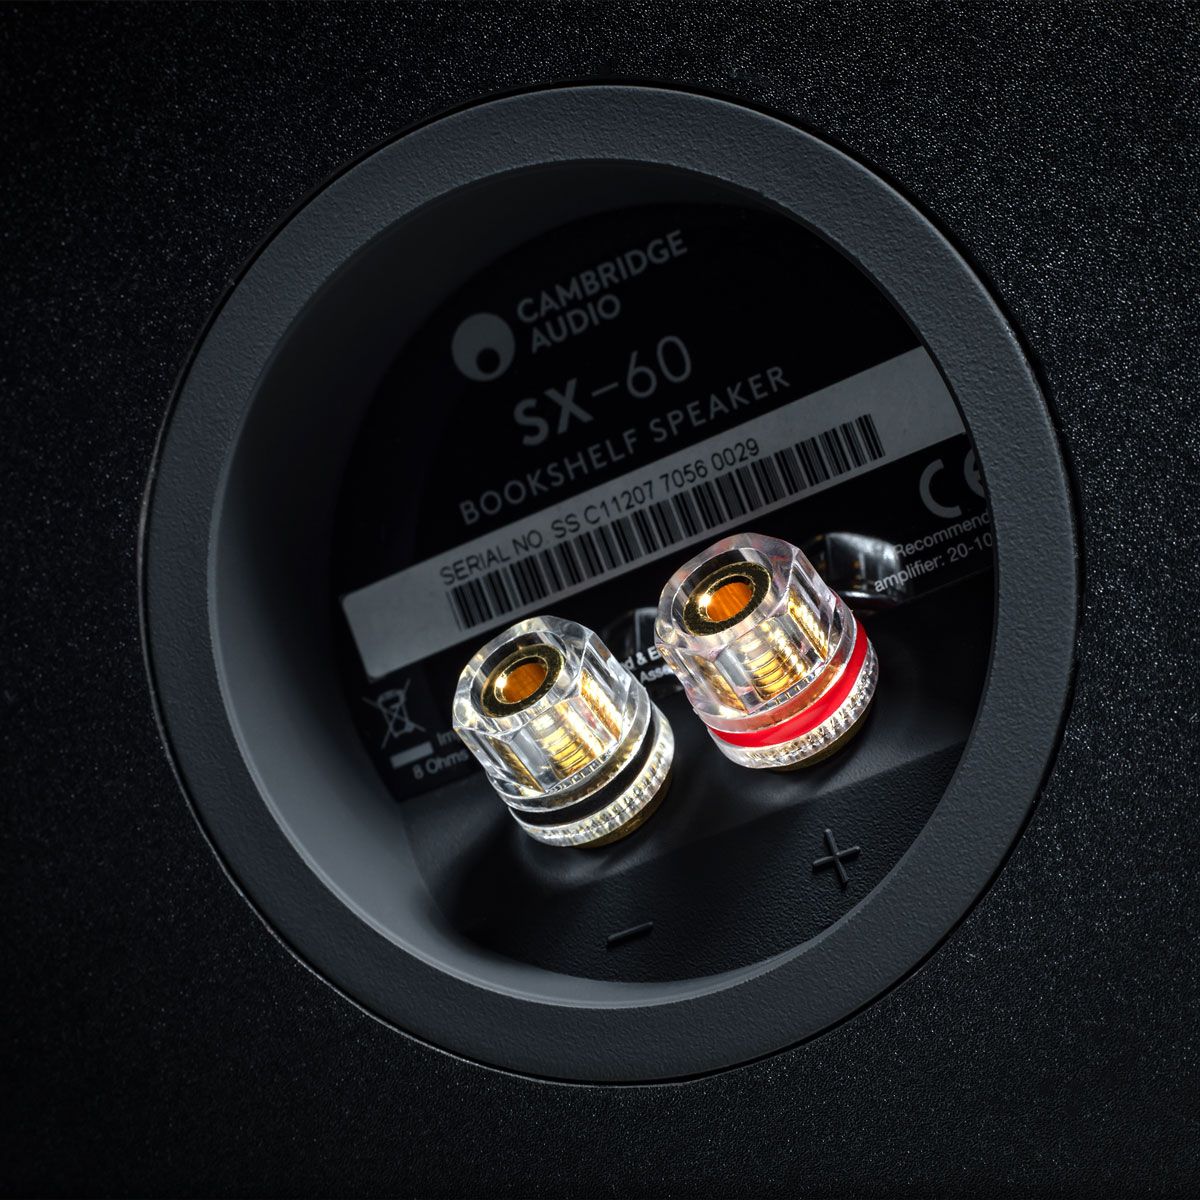 Cambridge Audio SX-60 V2, Back Detail